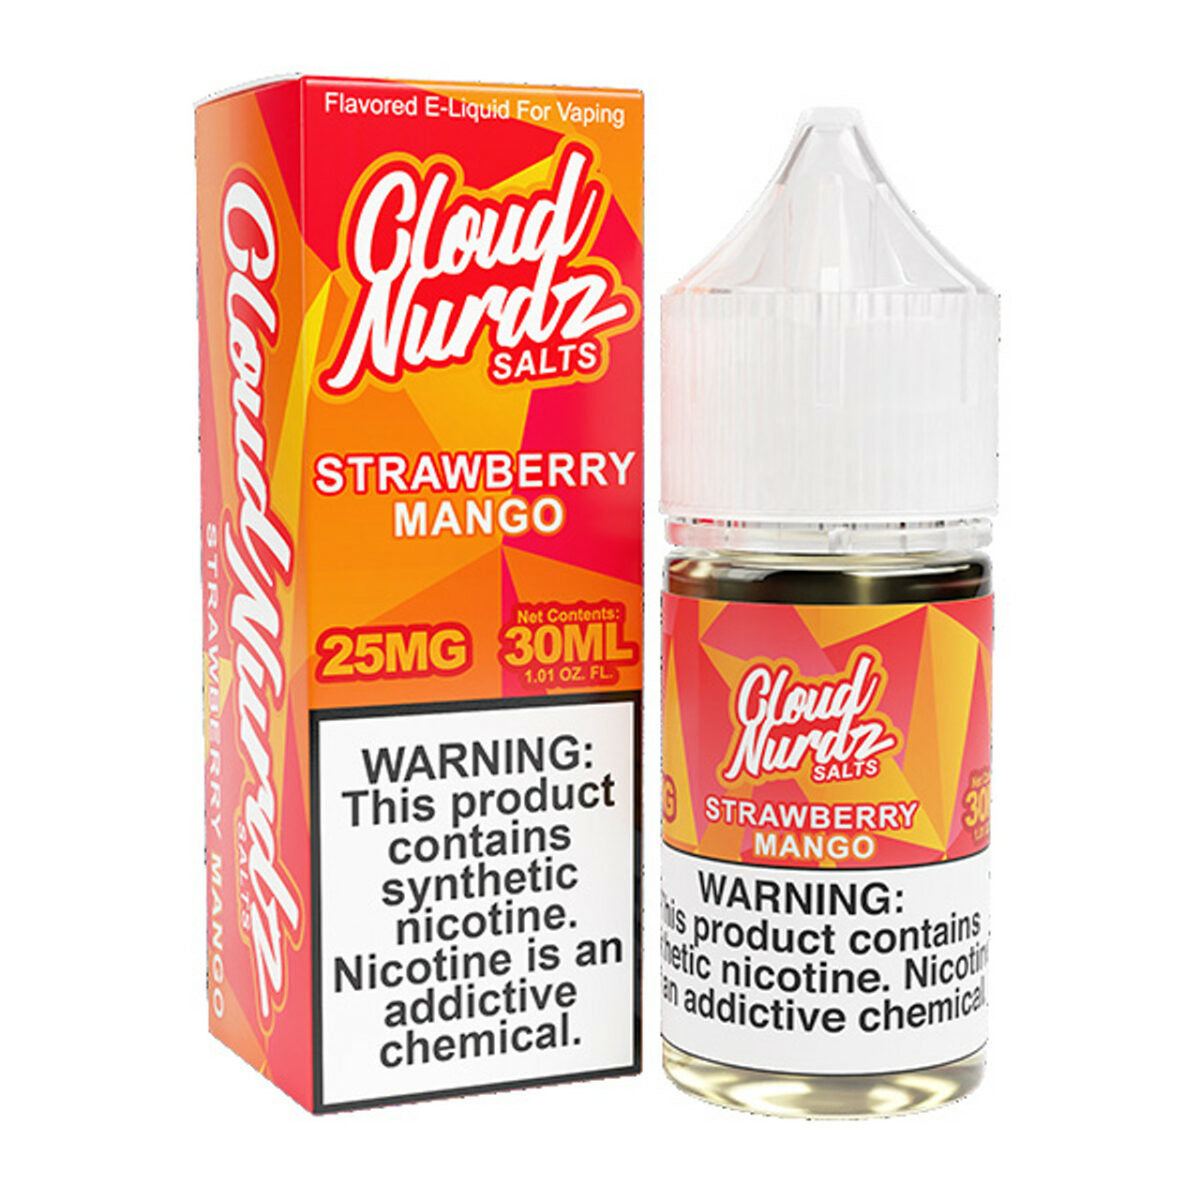 Strawberry Mango by Cloud Nurdz Salts Series 30mL with Packaging